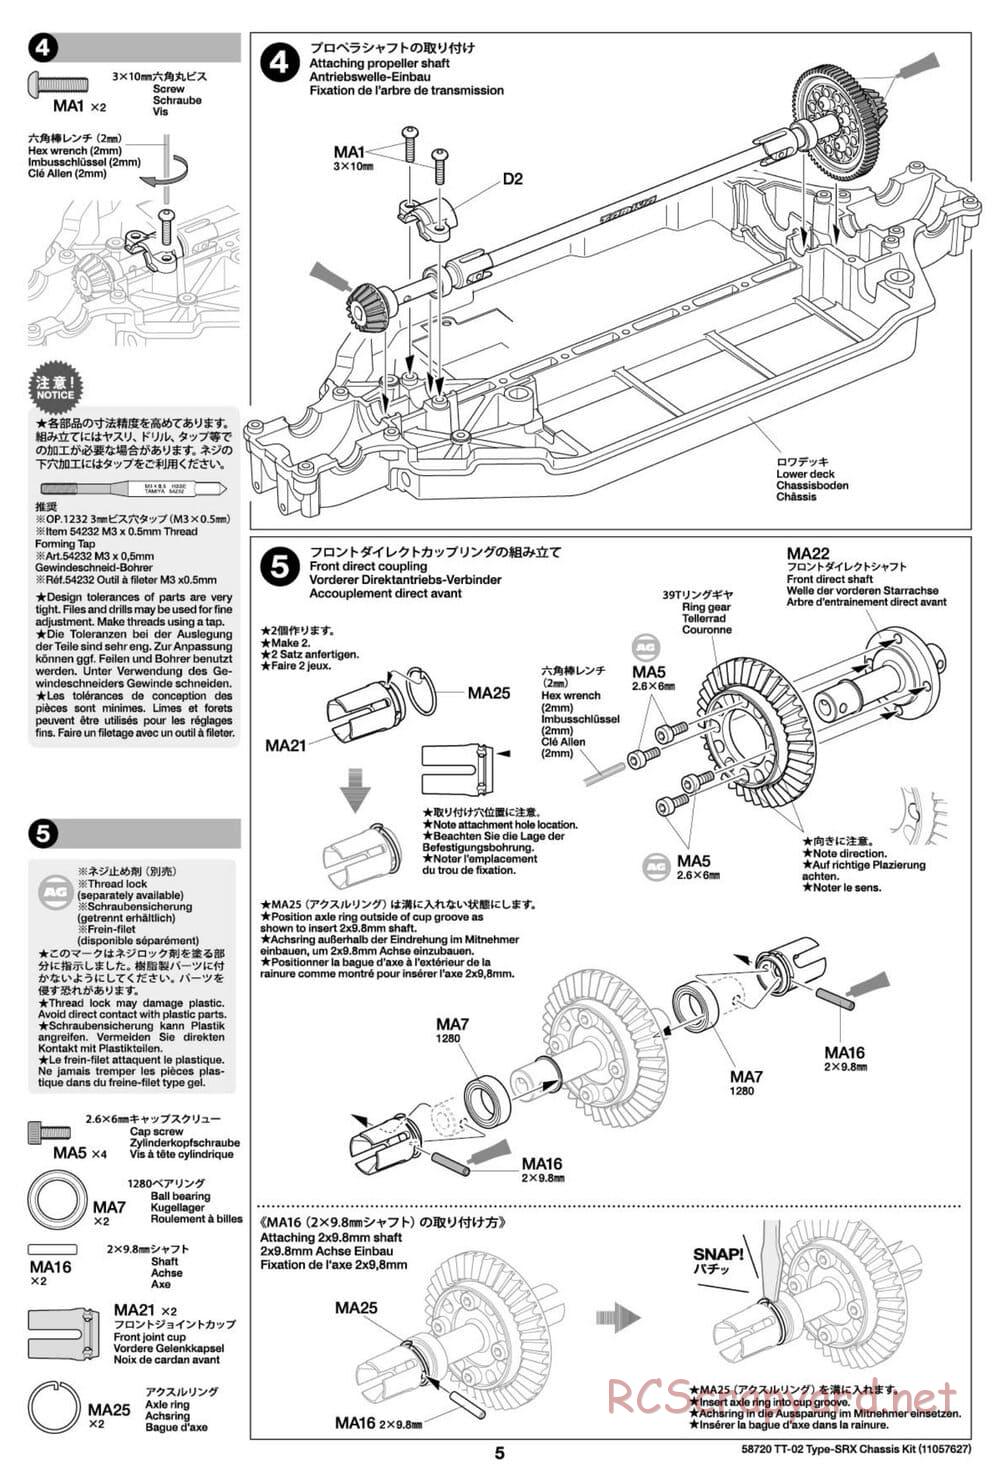 Tamiya - TT-02 Type-SRX Chassis - Manual - Page 5